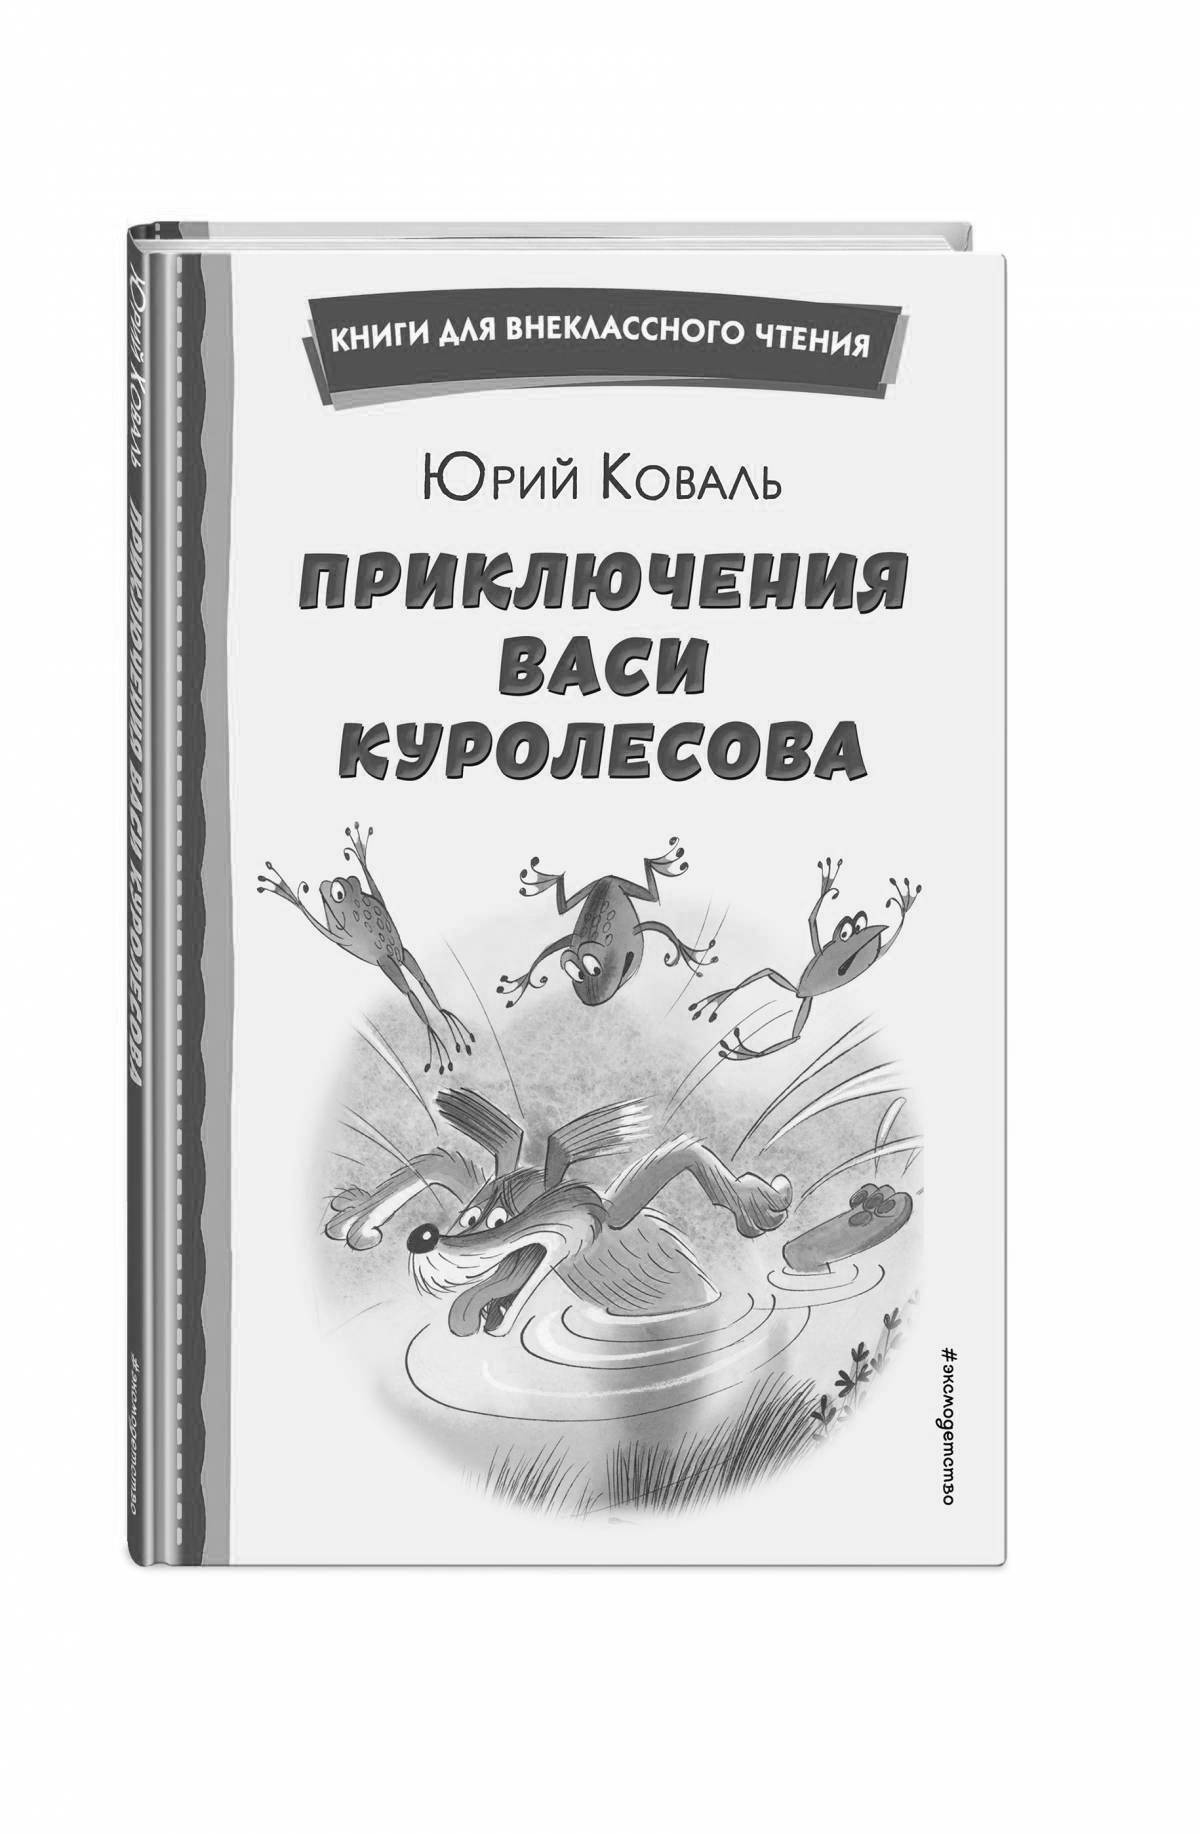 The exciting adventures of Vasya Kurolesov